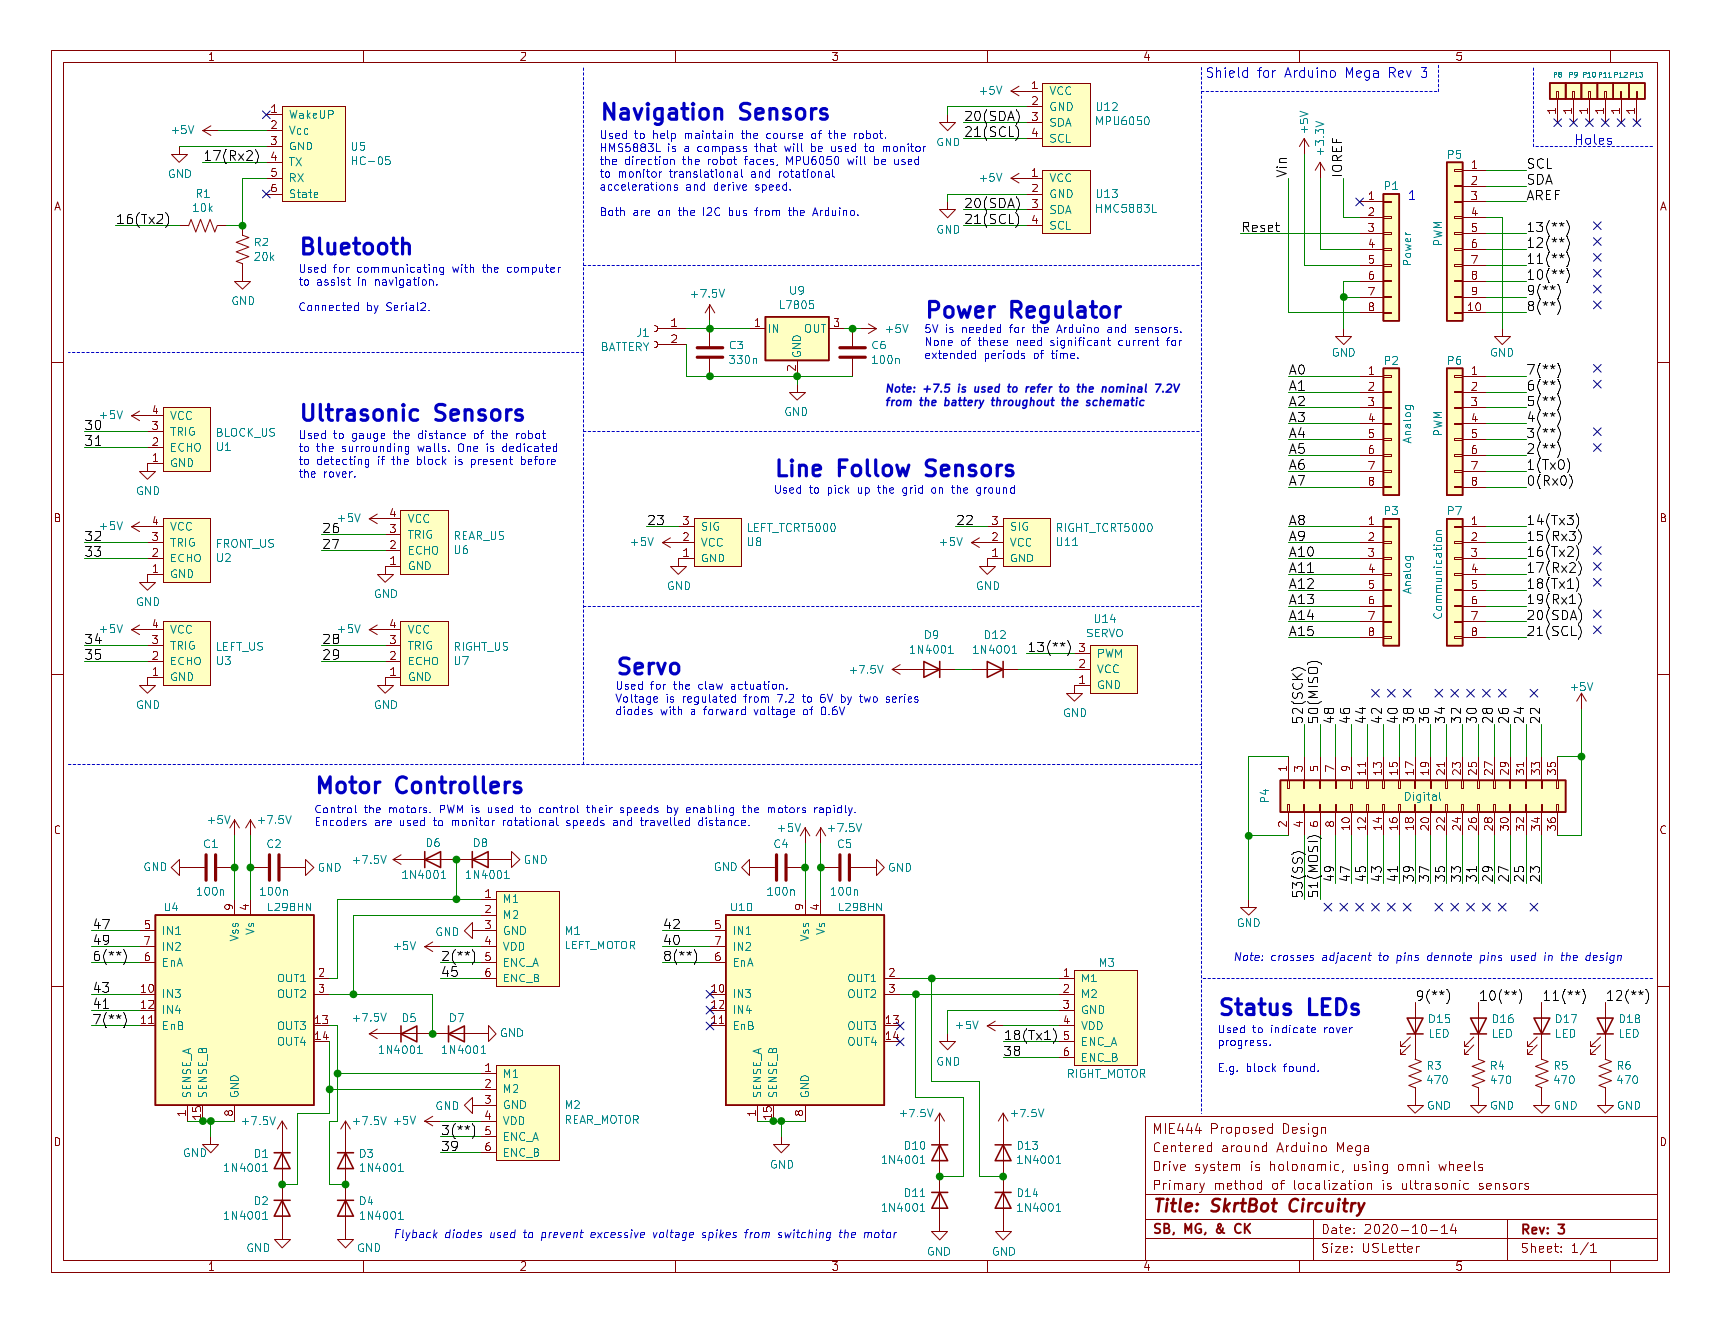 My propsed circuit (PDF version)